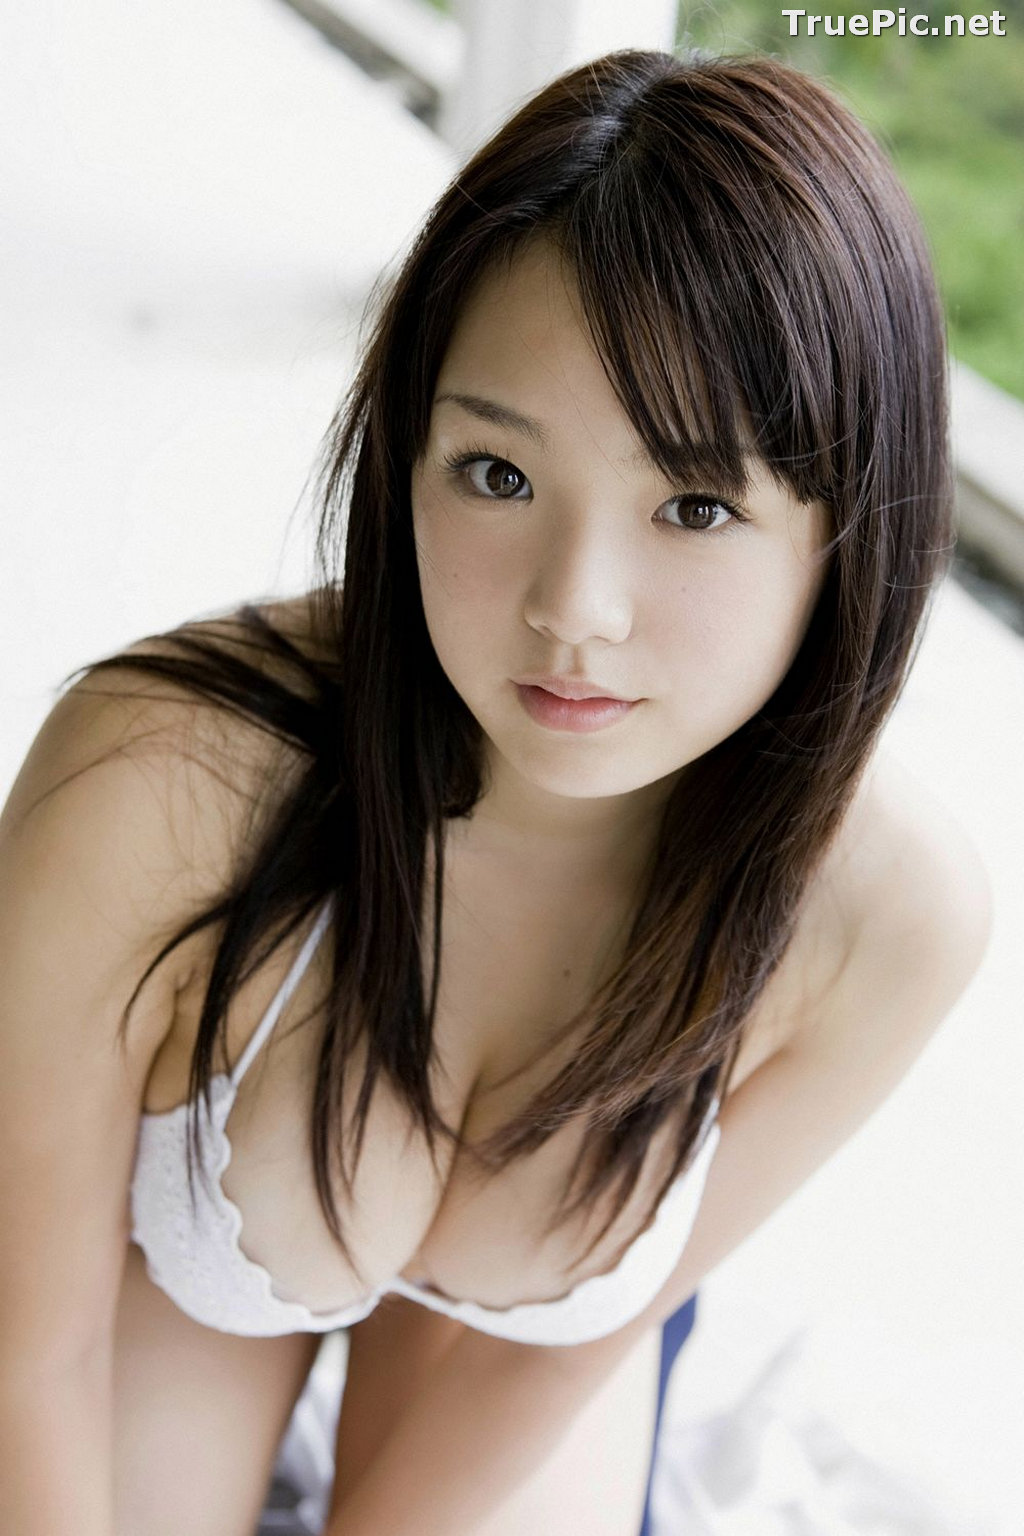 Image [YS Web] Vol.335 - Japanese Model Ai Shinozaki - Good Love Photo Album - TruePic.net - Picture-31